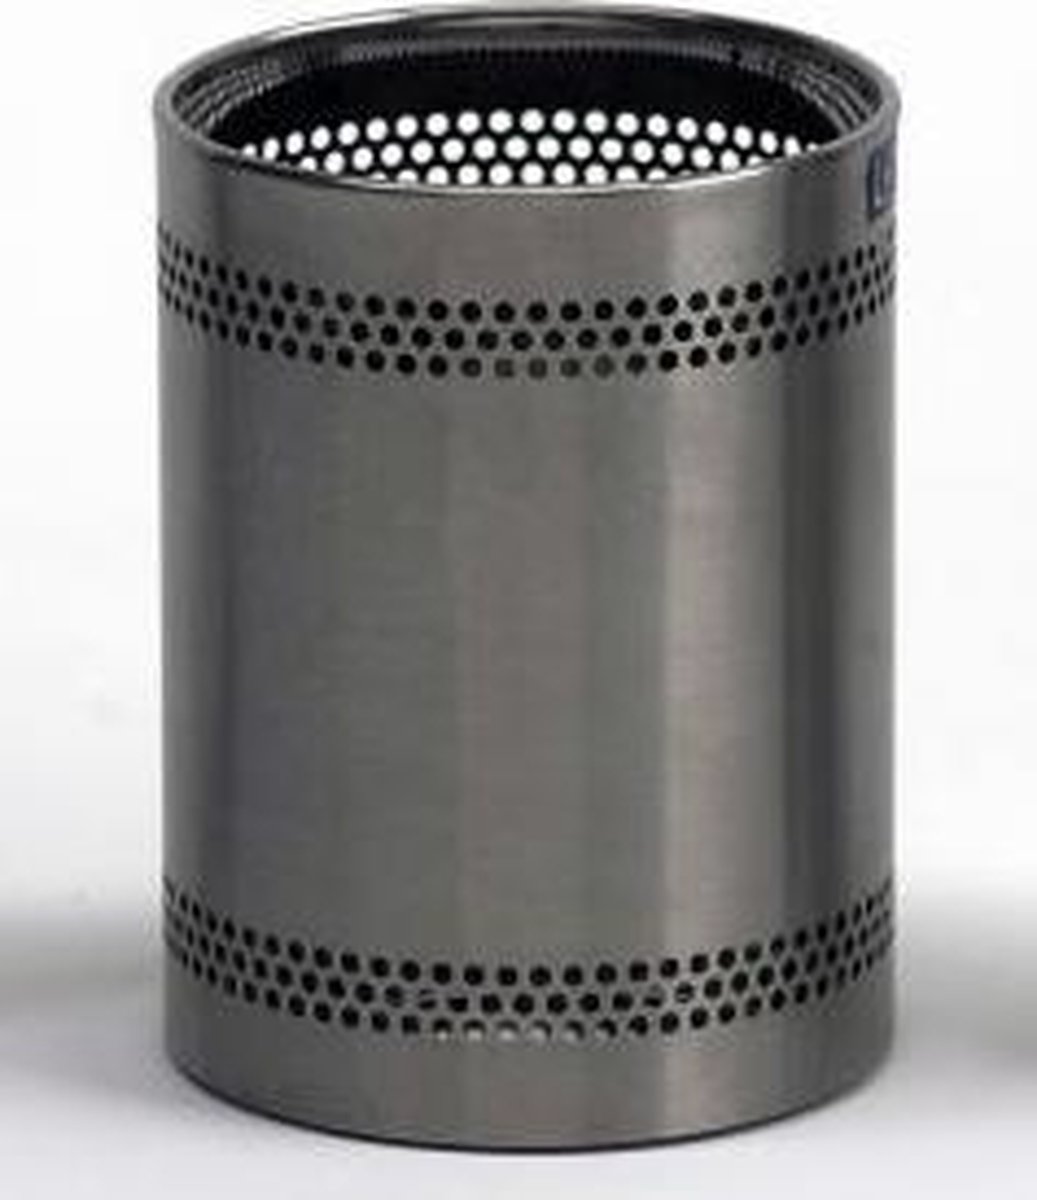 Graepel G-Line Pro trash stainless steel - Series Scopinox